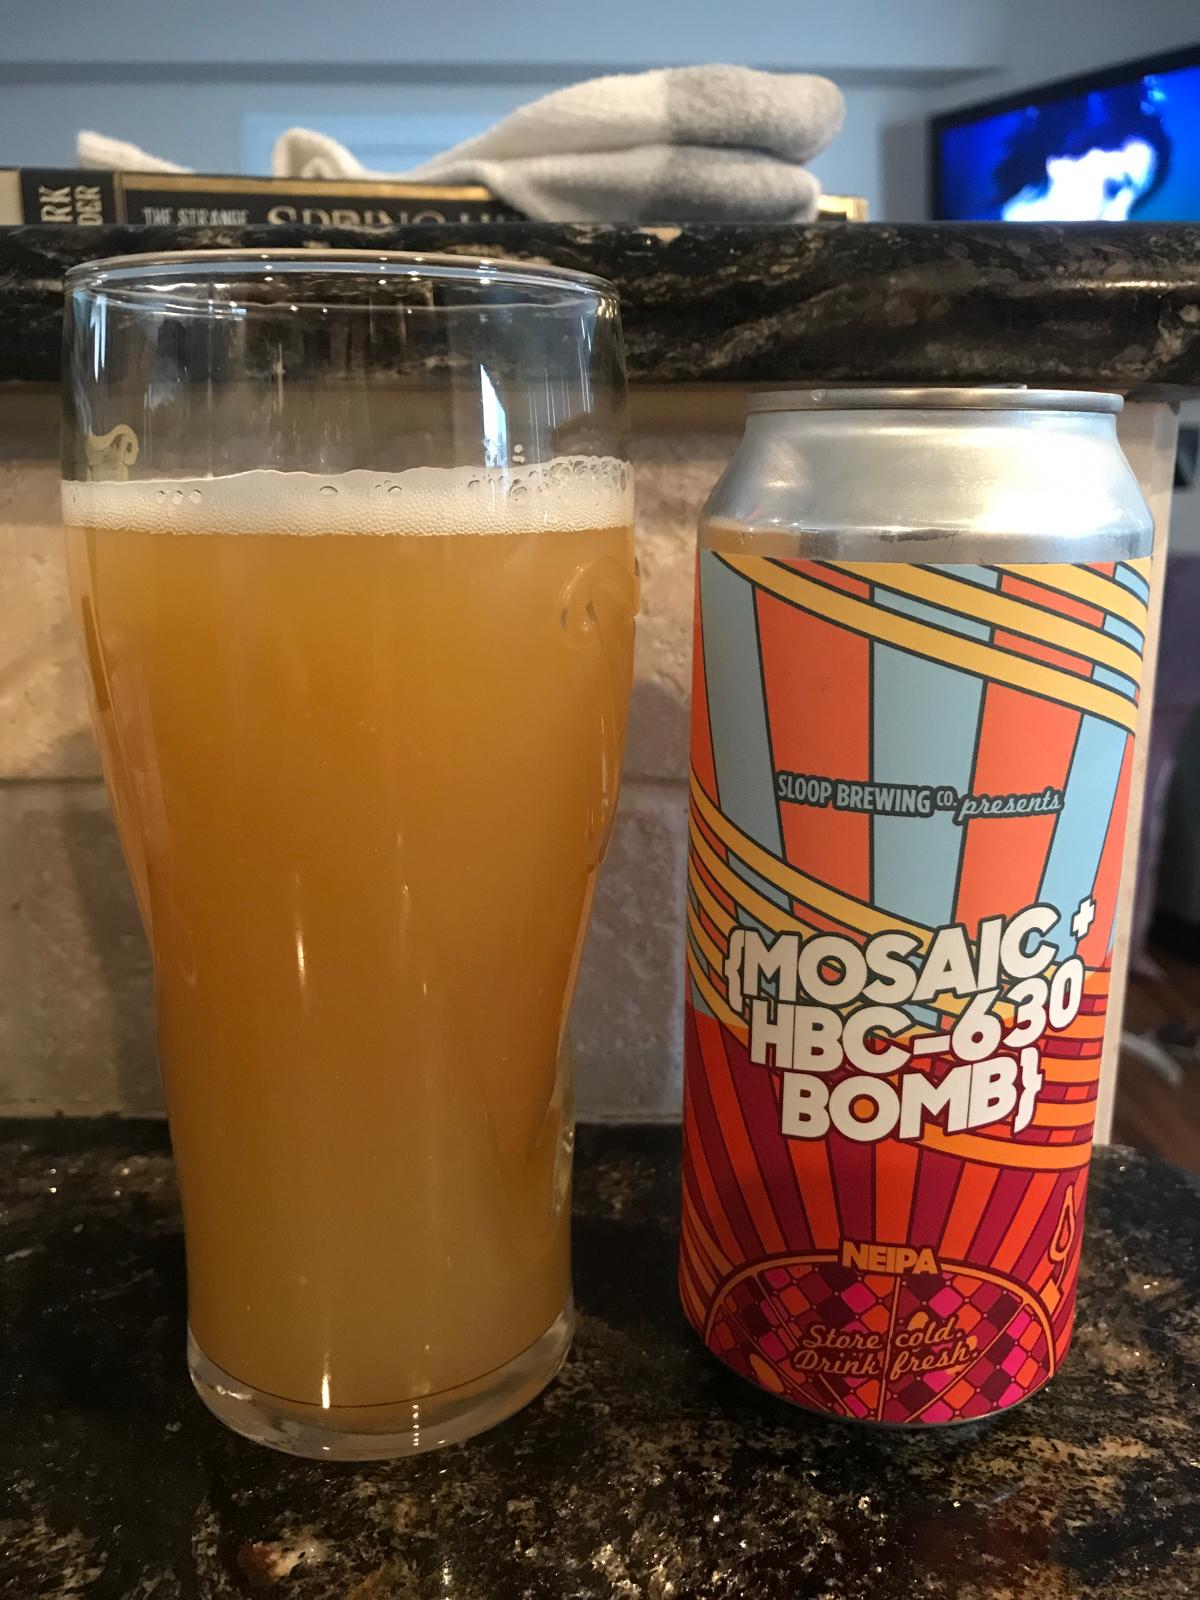 Mosaic   HBC630 Bomb